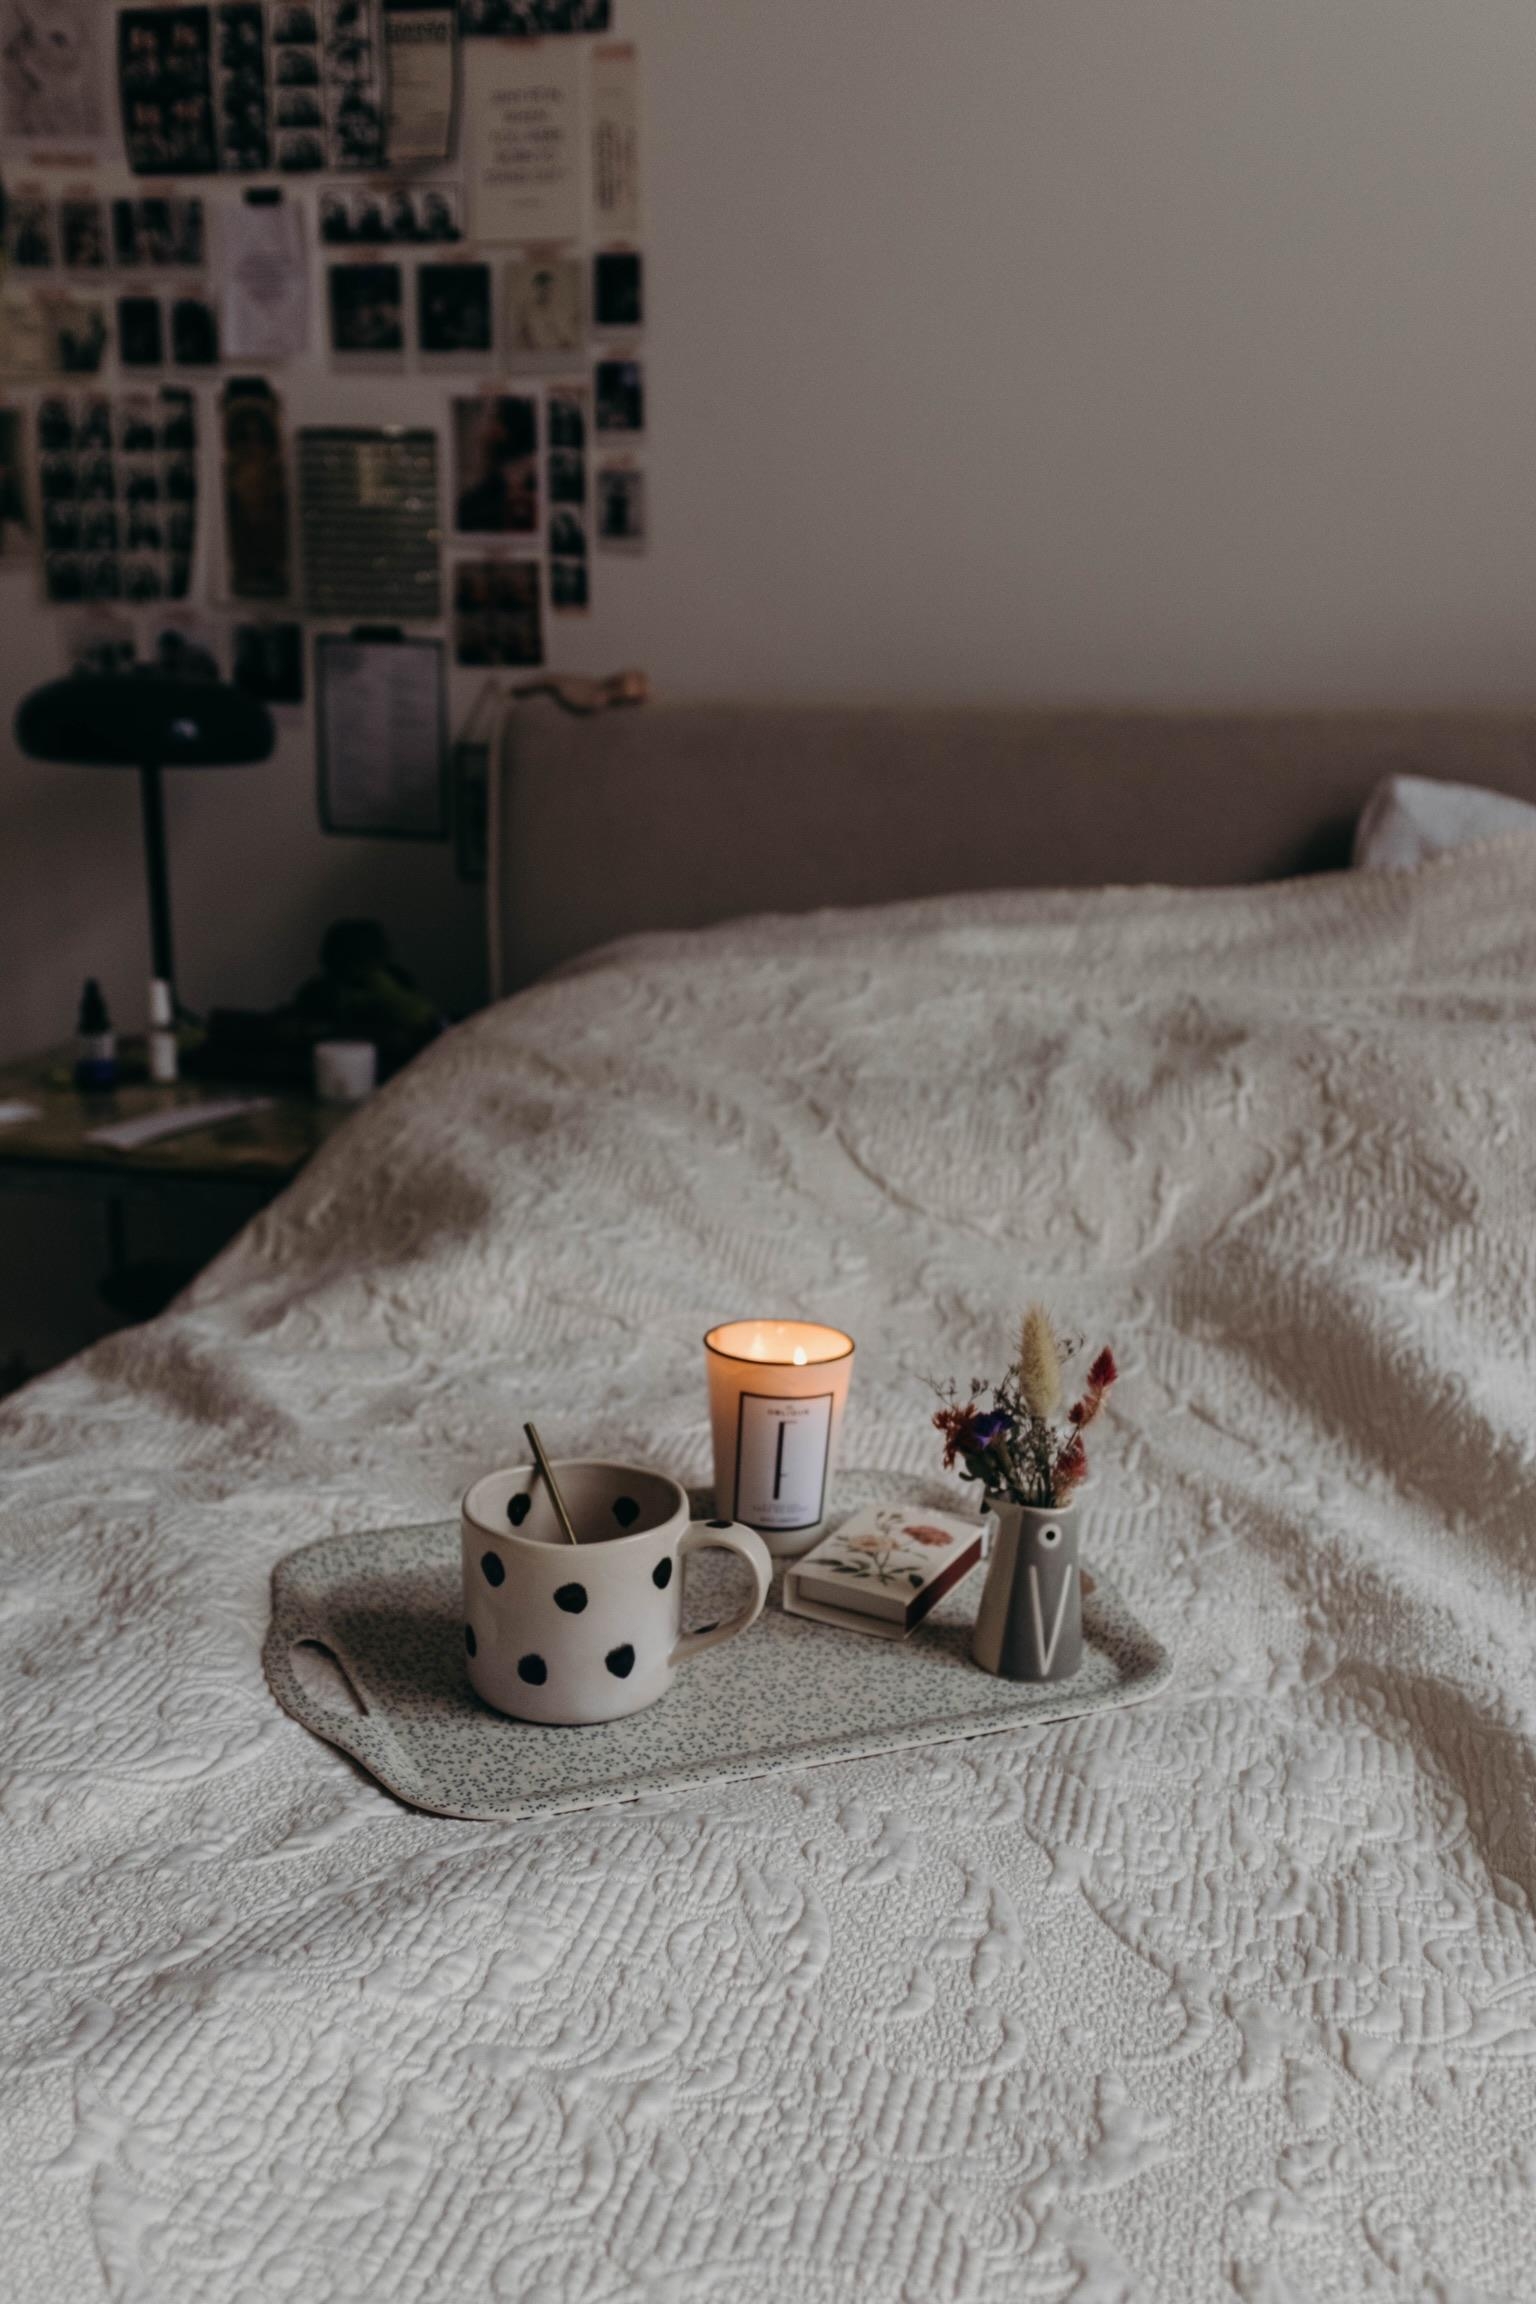 Cozy bedroom 🥰 #schlafzimmer #cozy #gemütlich 